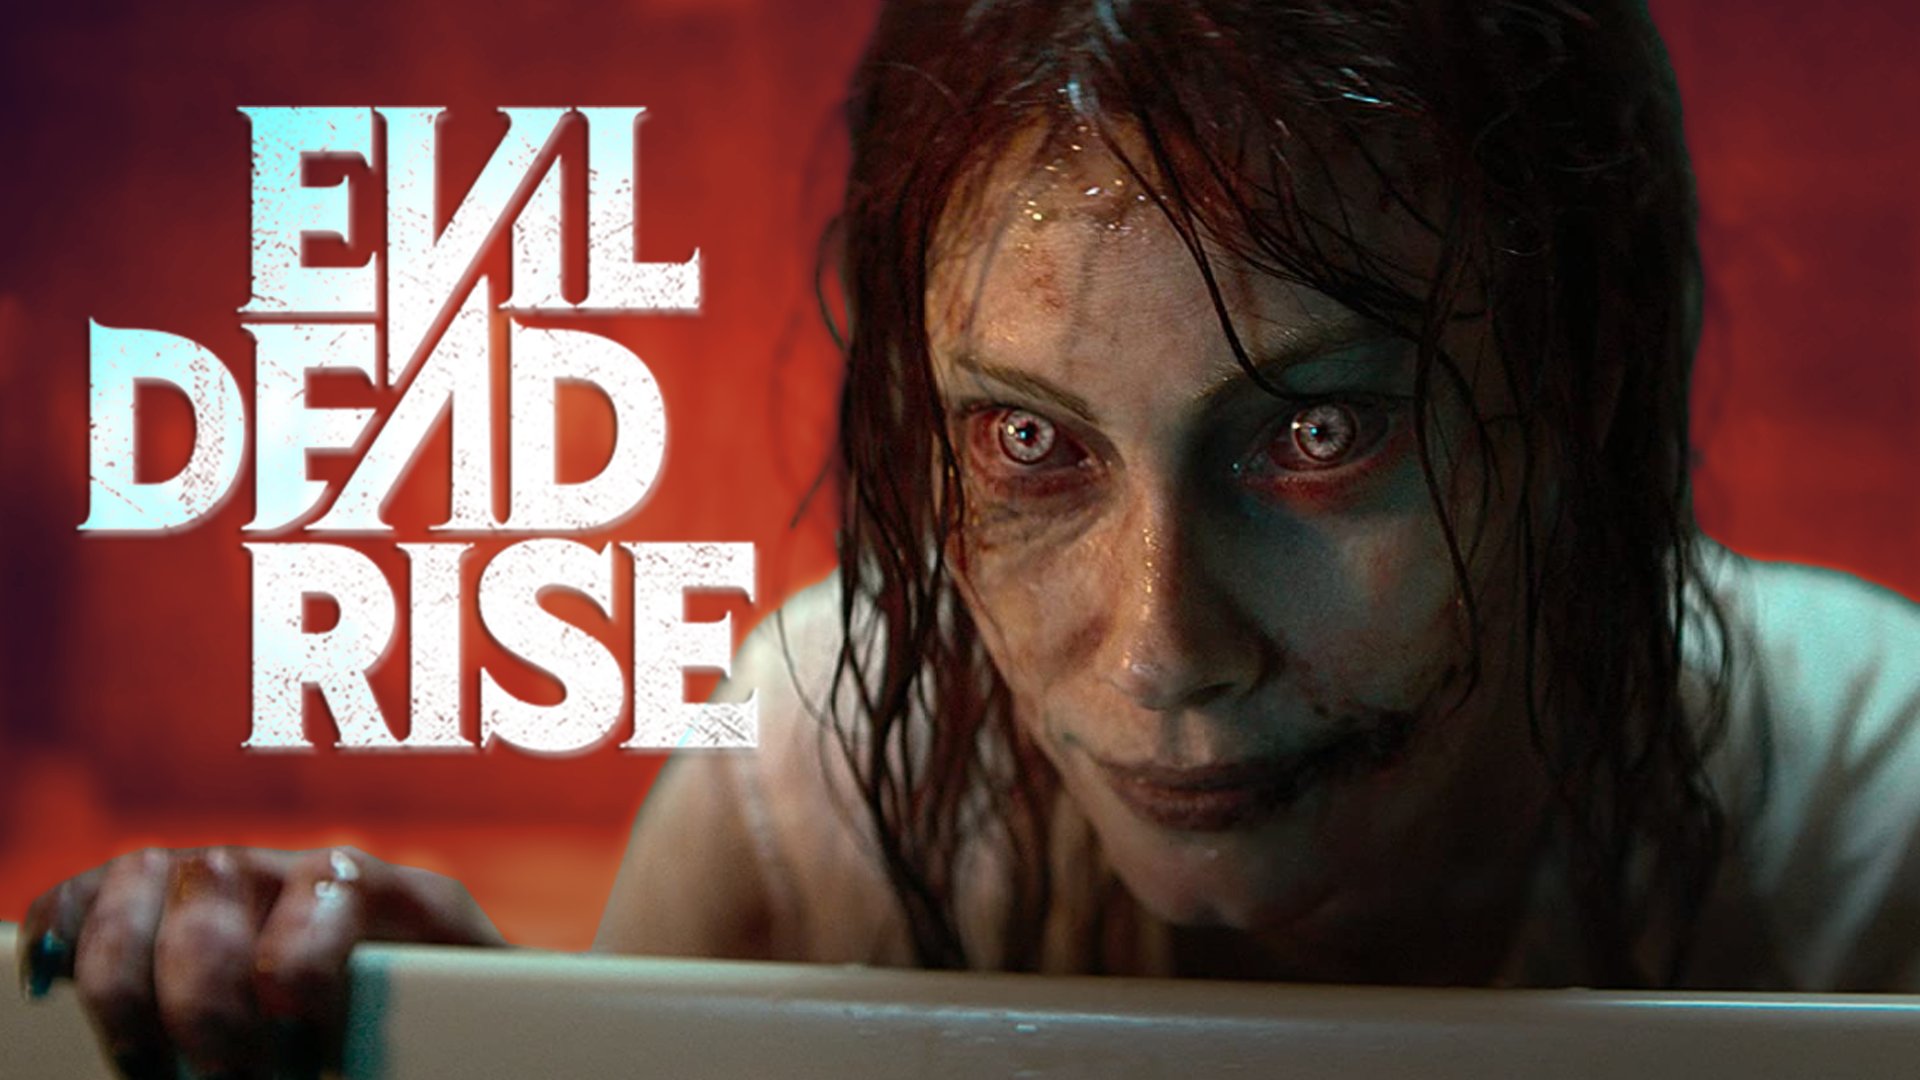 EVIL DEAD RISE - Official Trailer - Greenband 